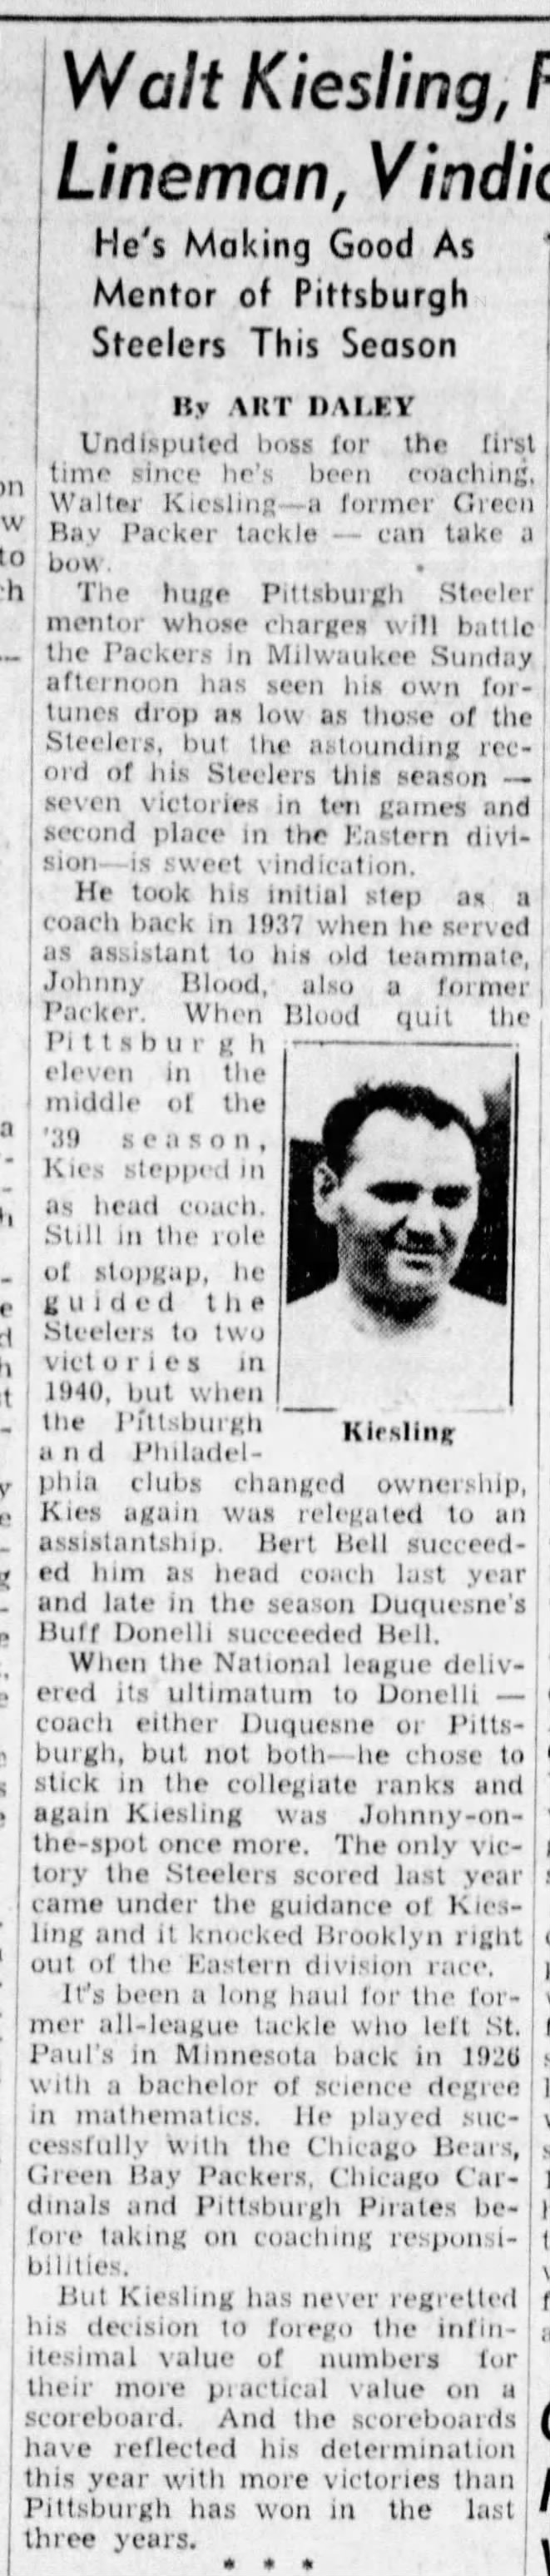 Walt Kiesling, Former Packer Lineman, Vindicates Record